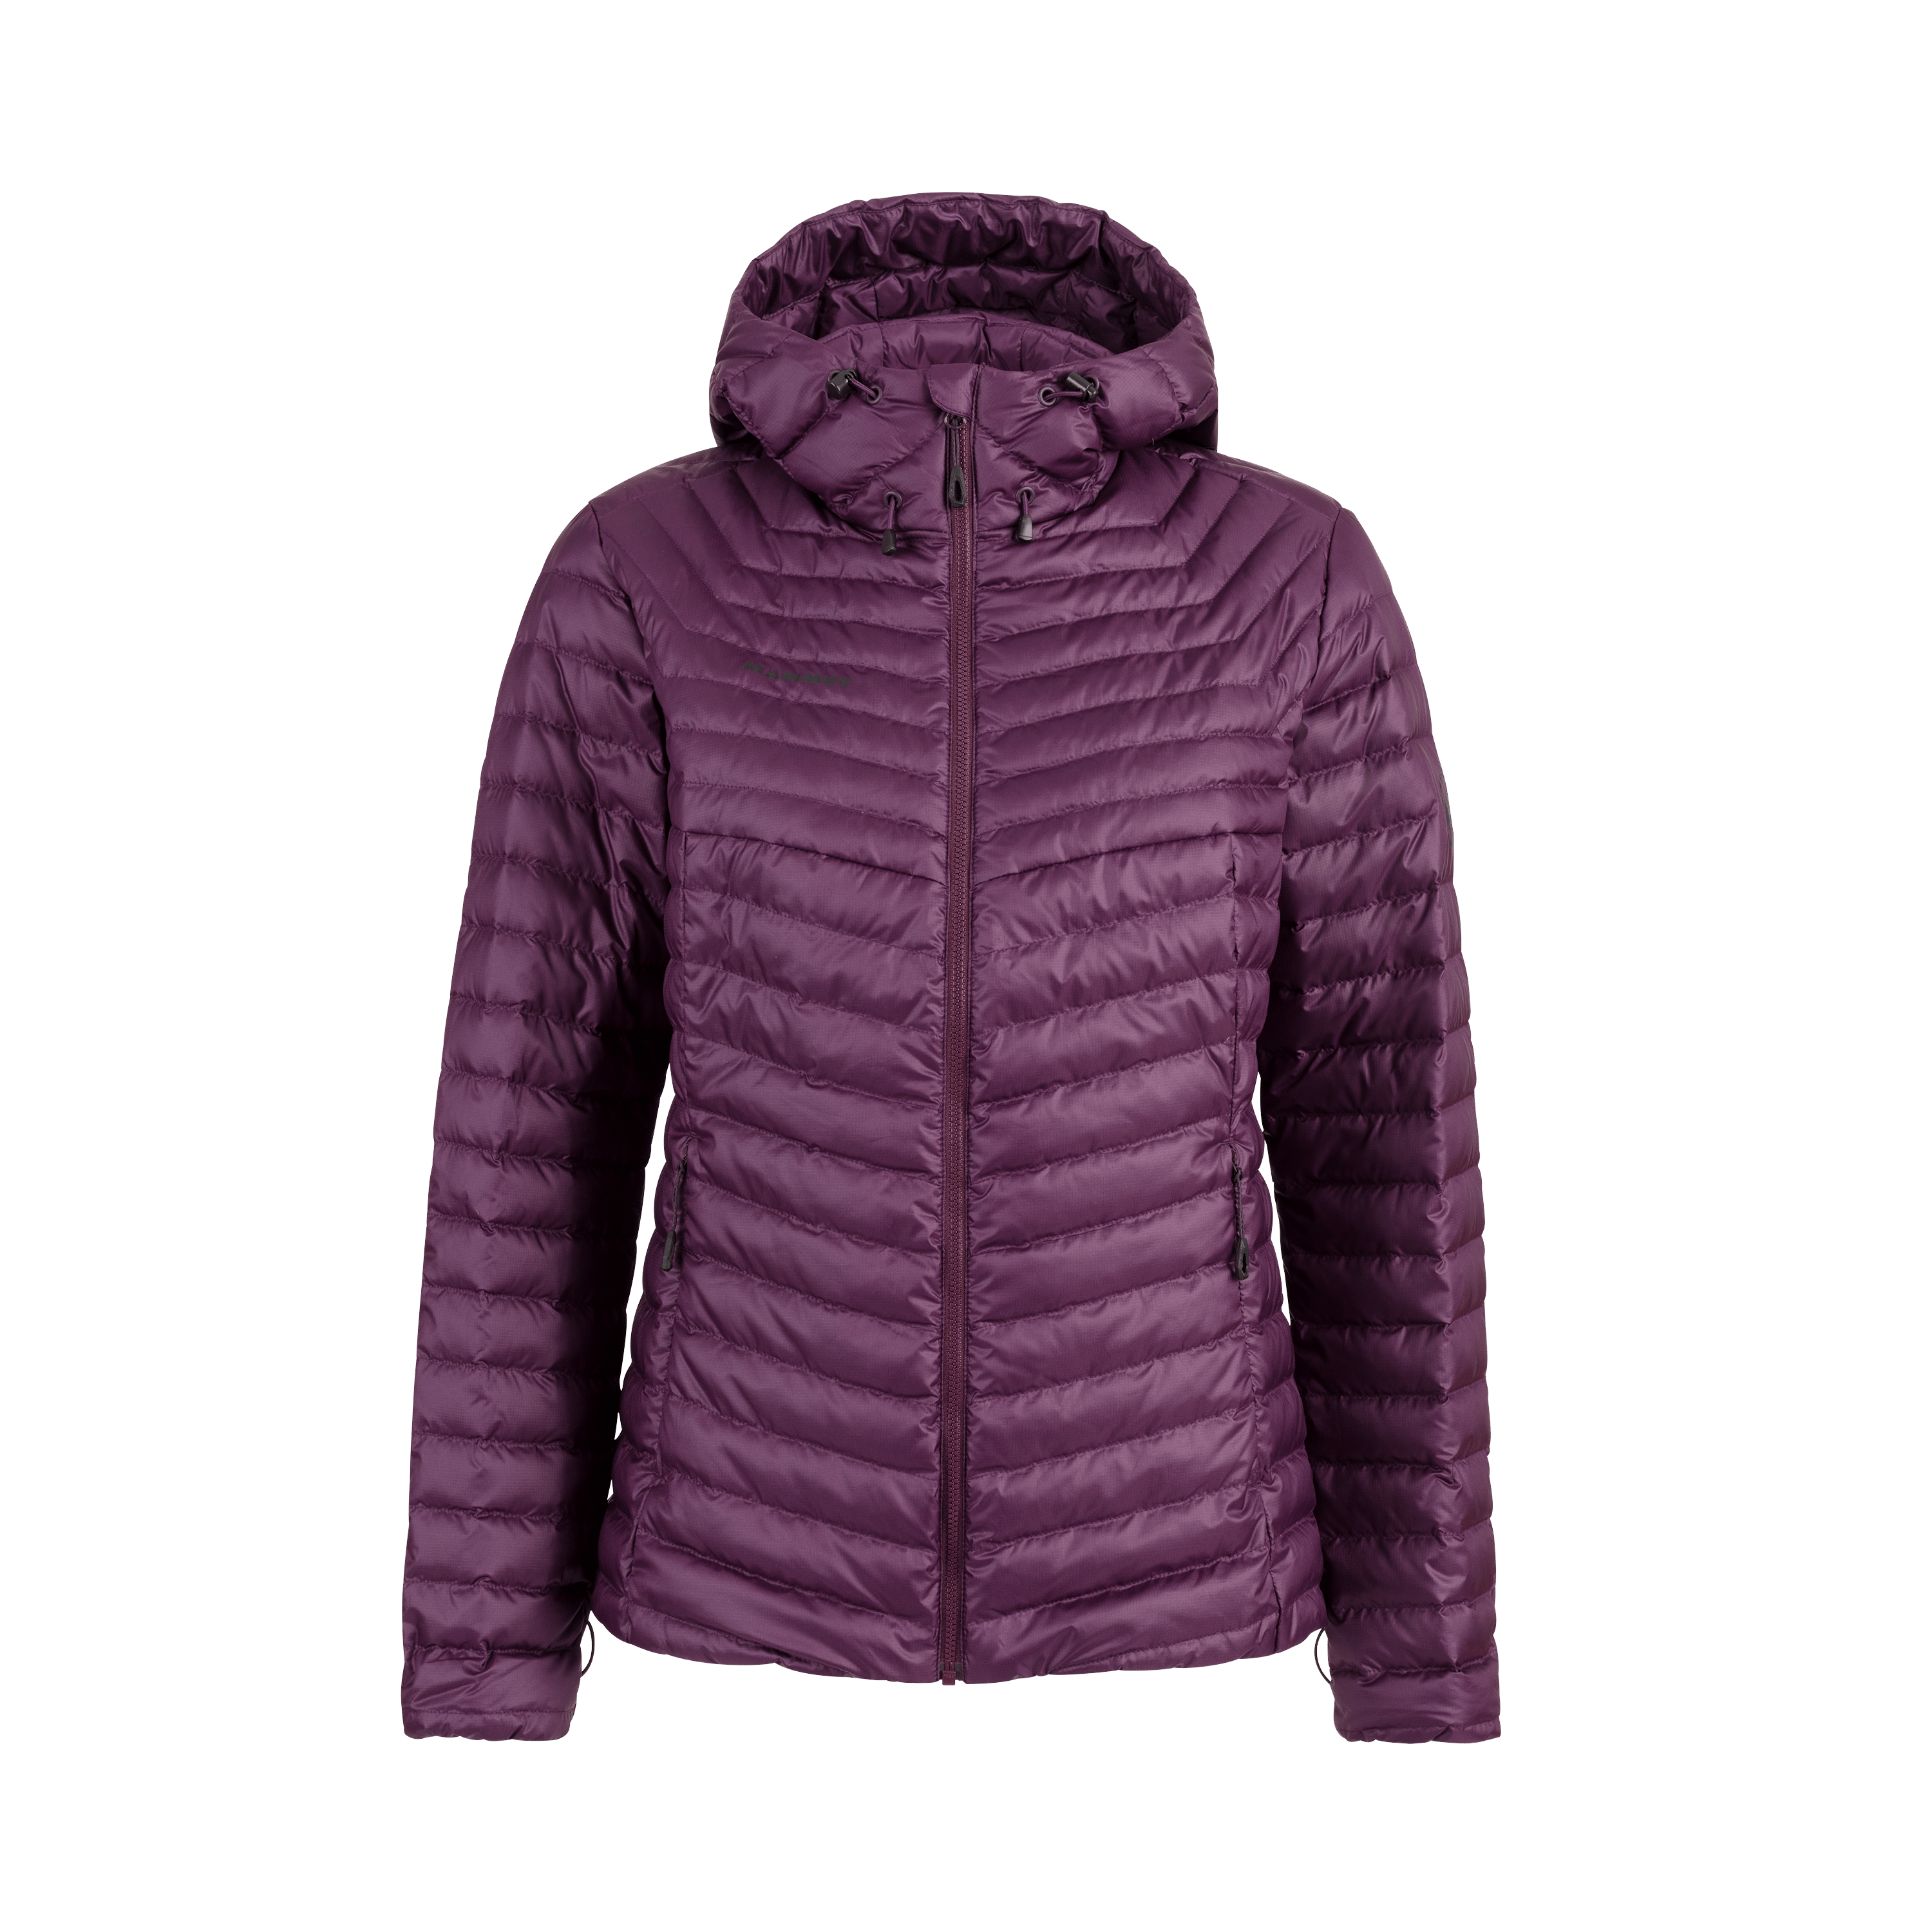 Convey IN Hooded Jacket Women - blackberry thumbnail